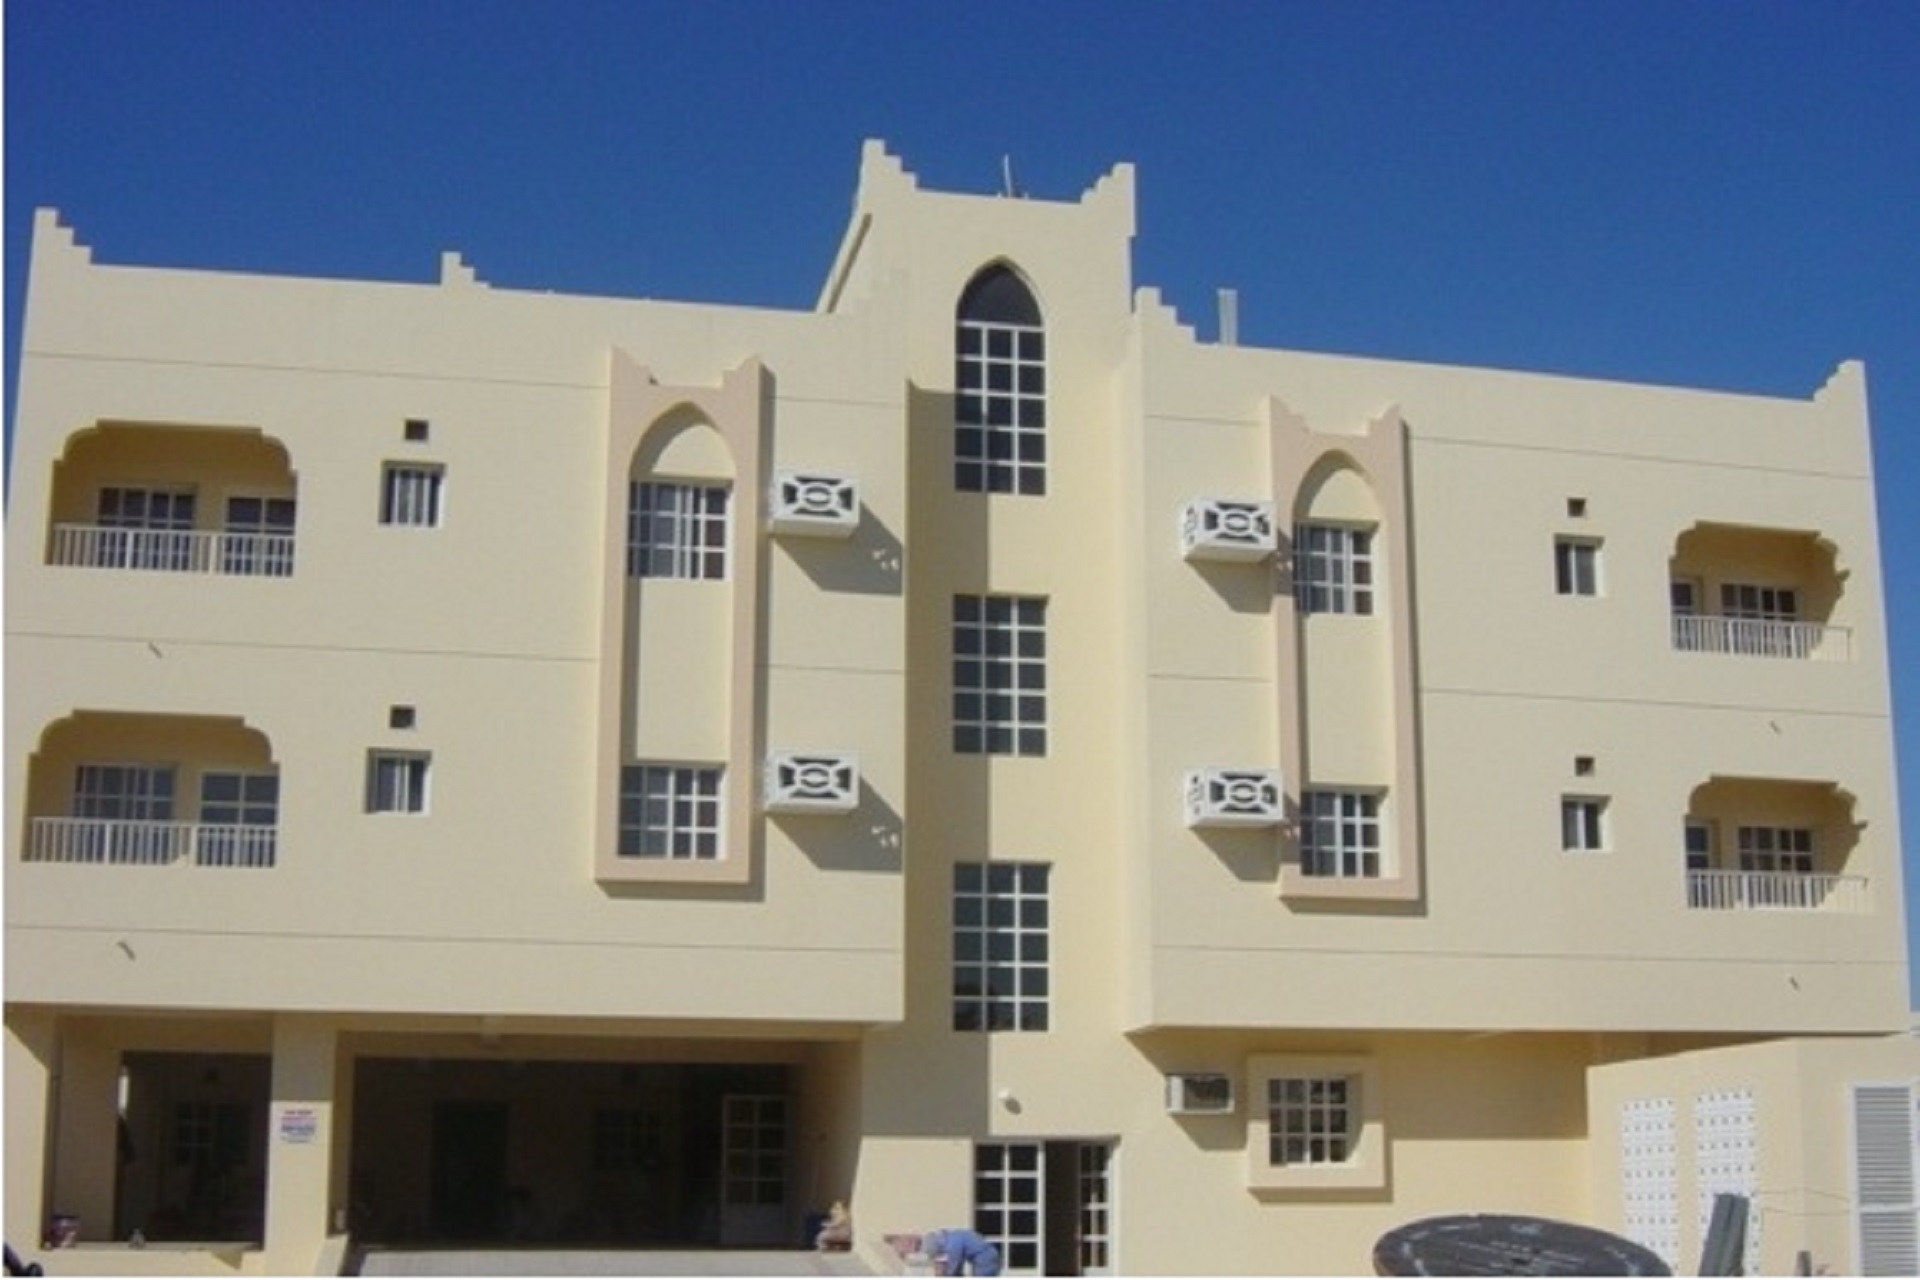 3 bedrooms Unfurnished apartments Madinat Khalifa in KTB